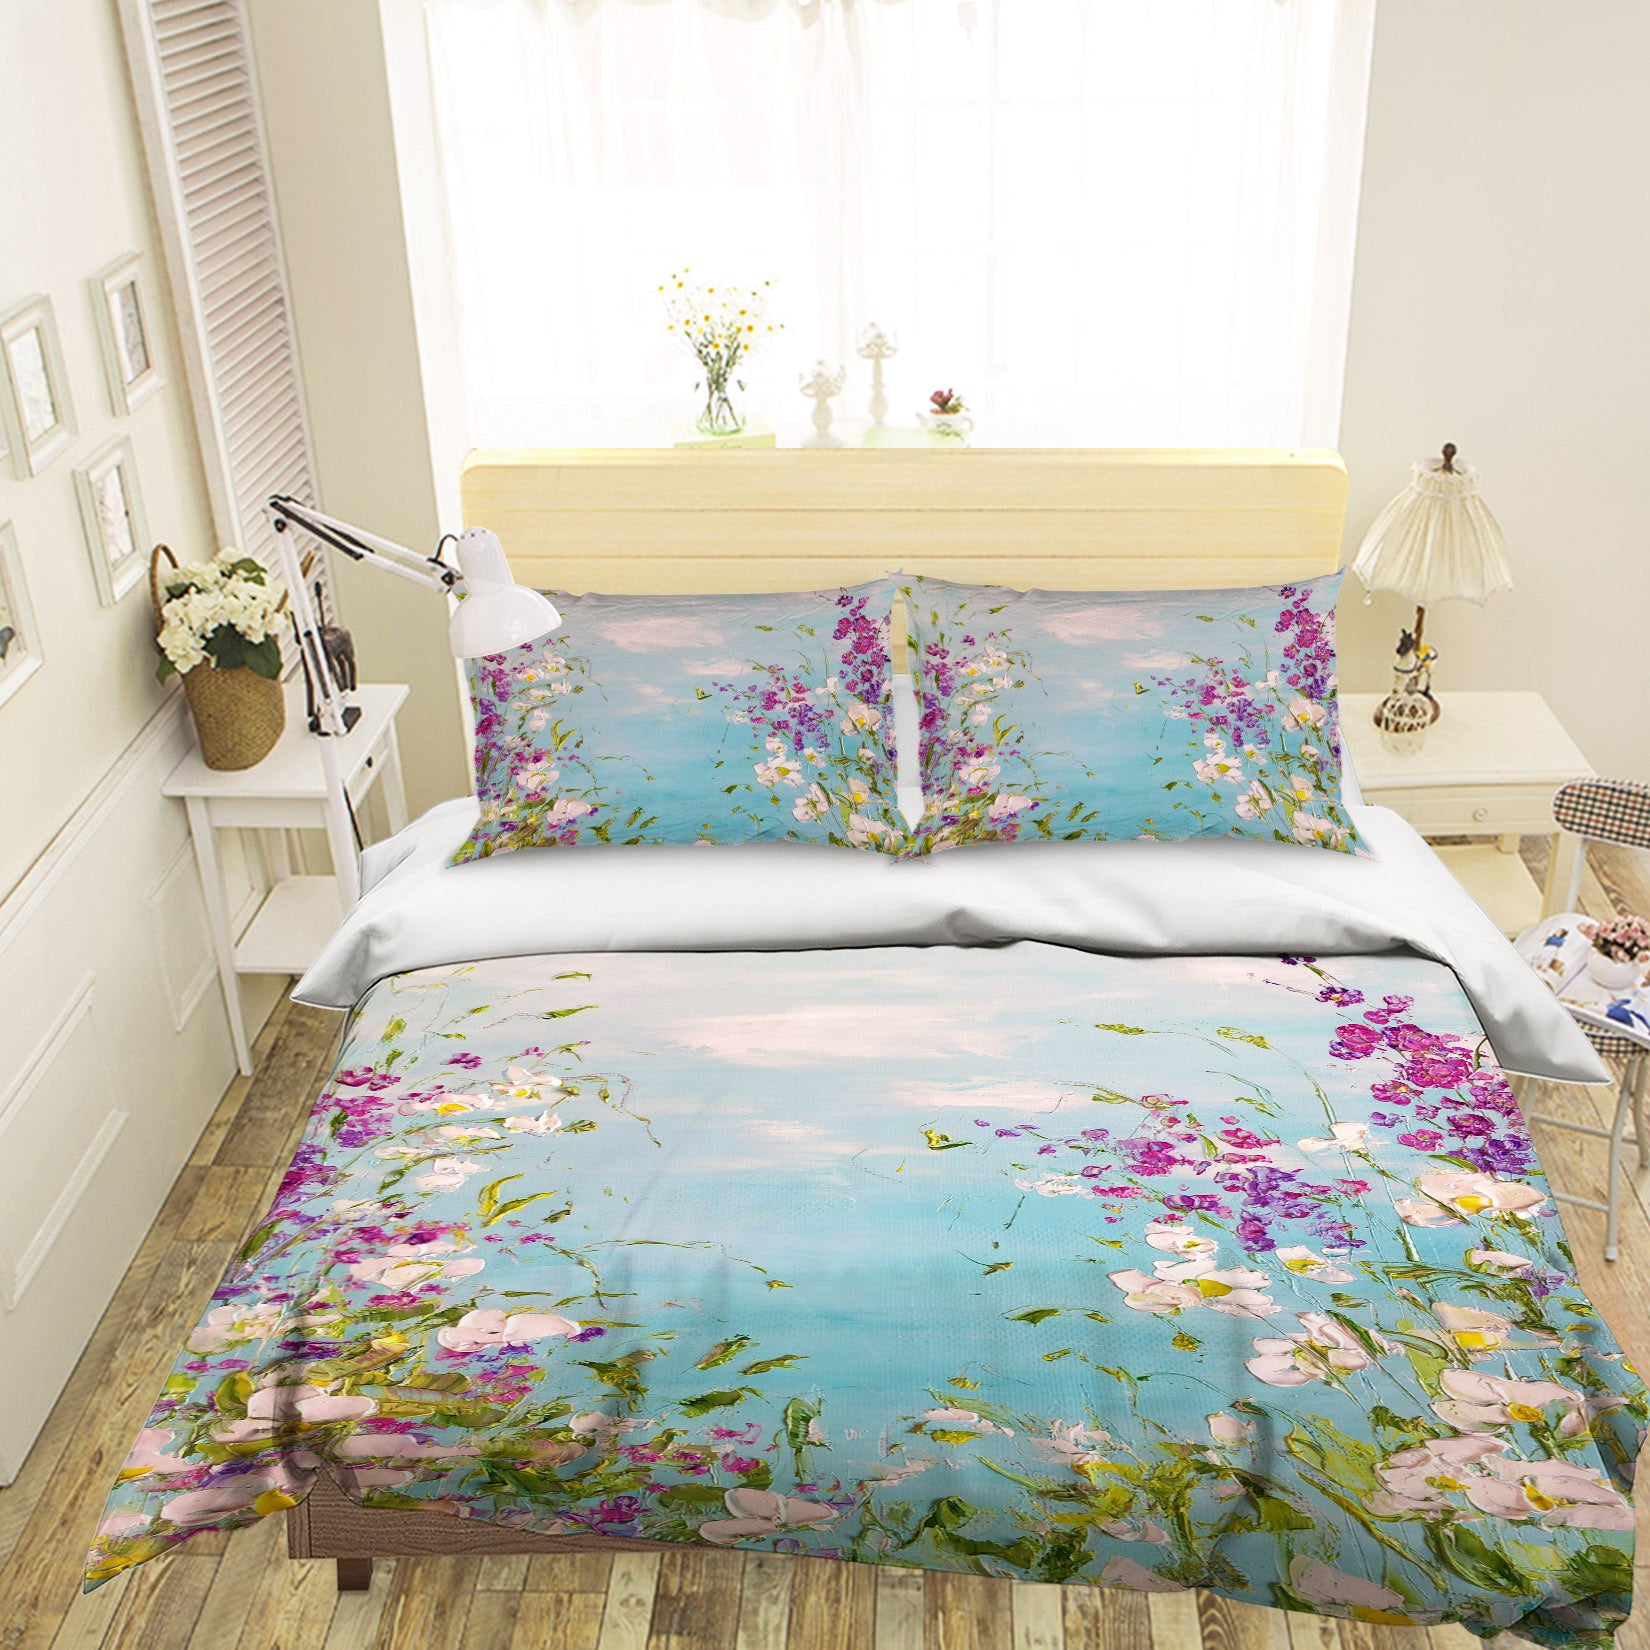 3D Paint Flower Sky 538 Skromova Marina Bedding Bed Pillowcases Quilt